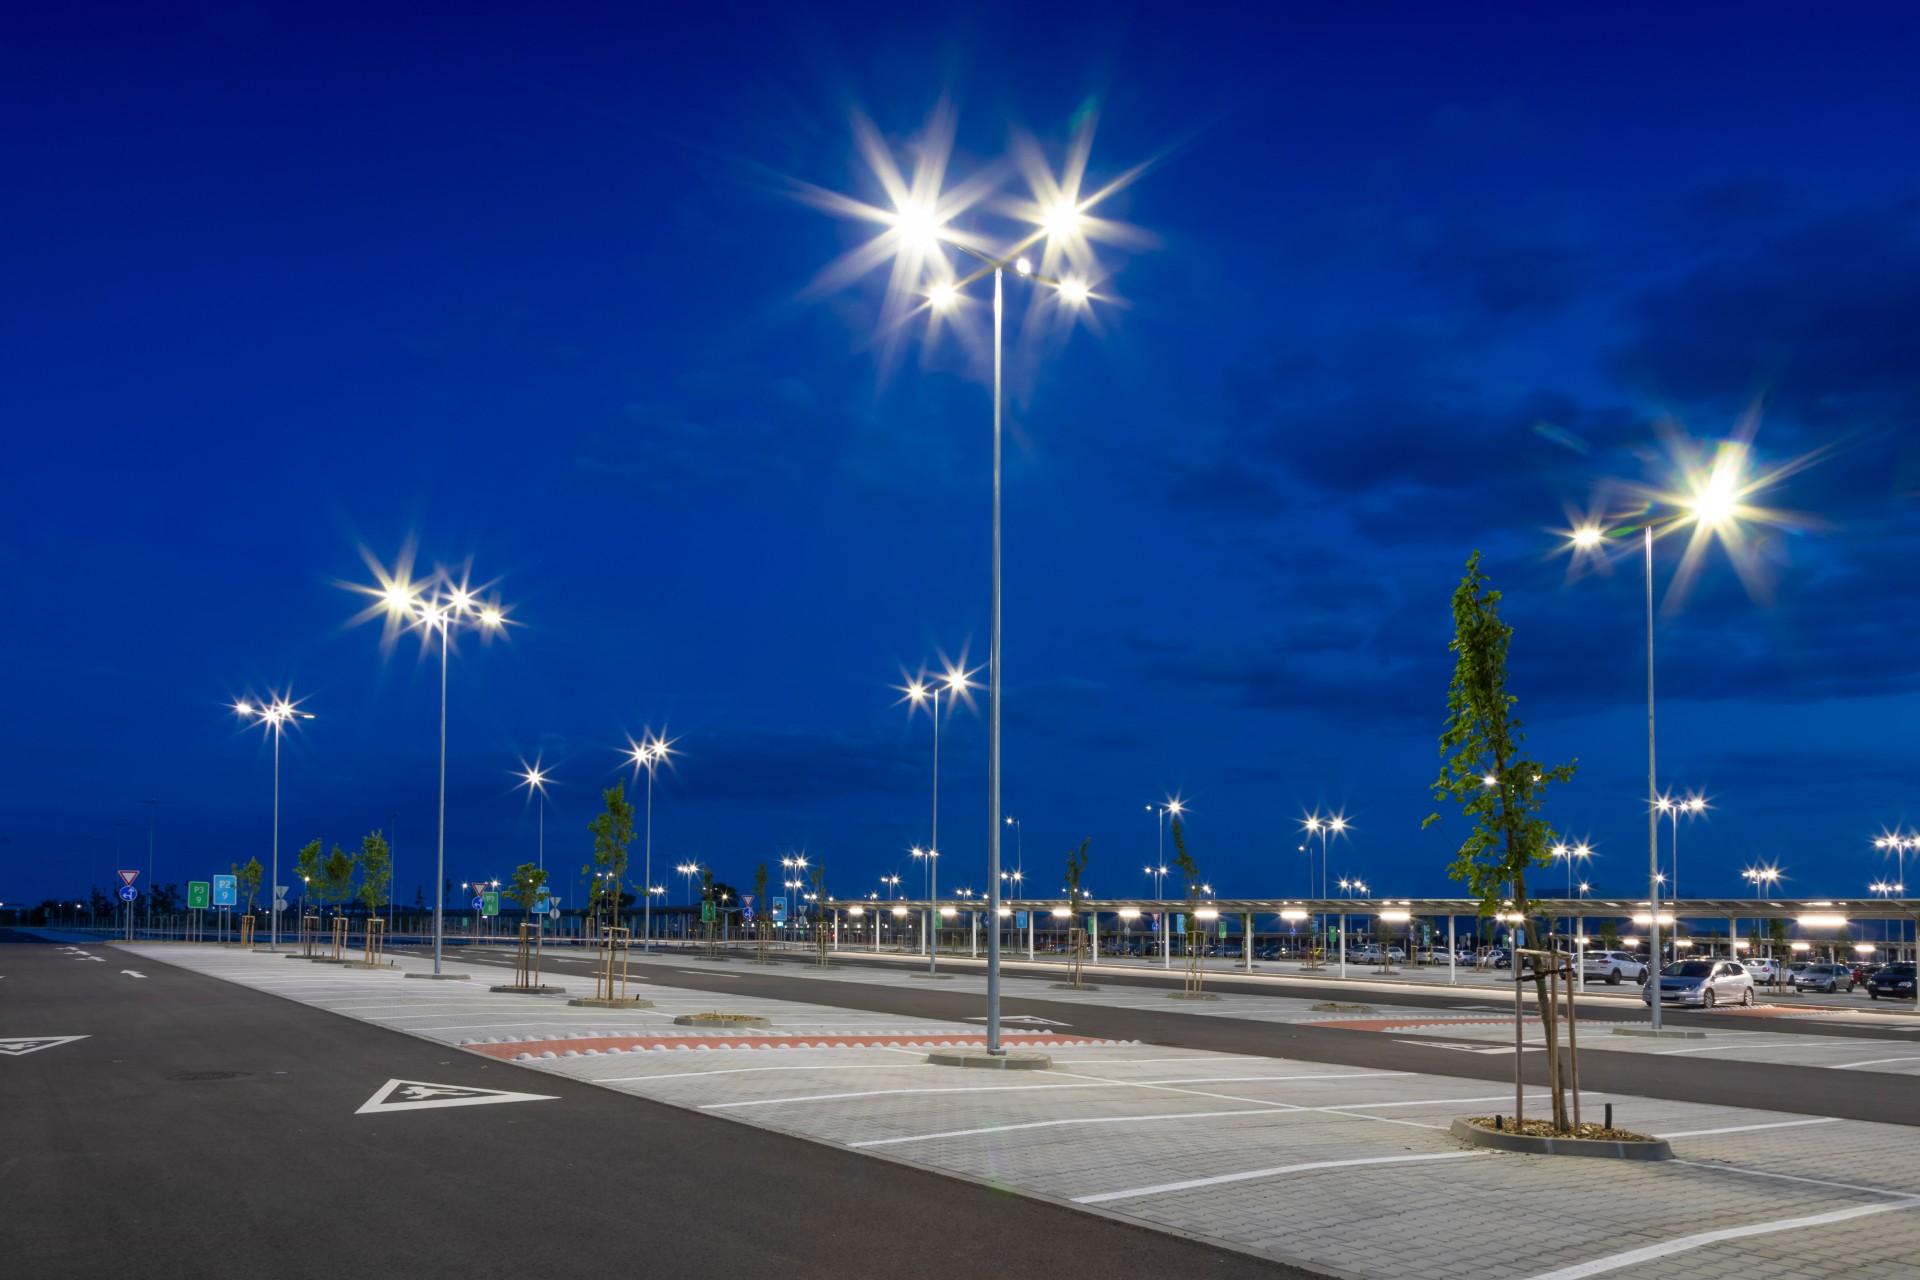 LED Parking Lot Lighting: The Benefits